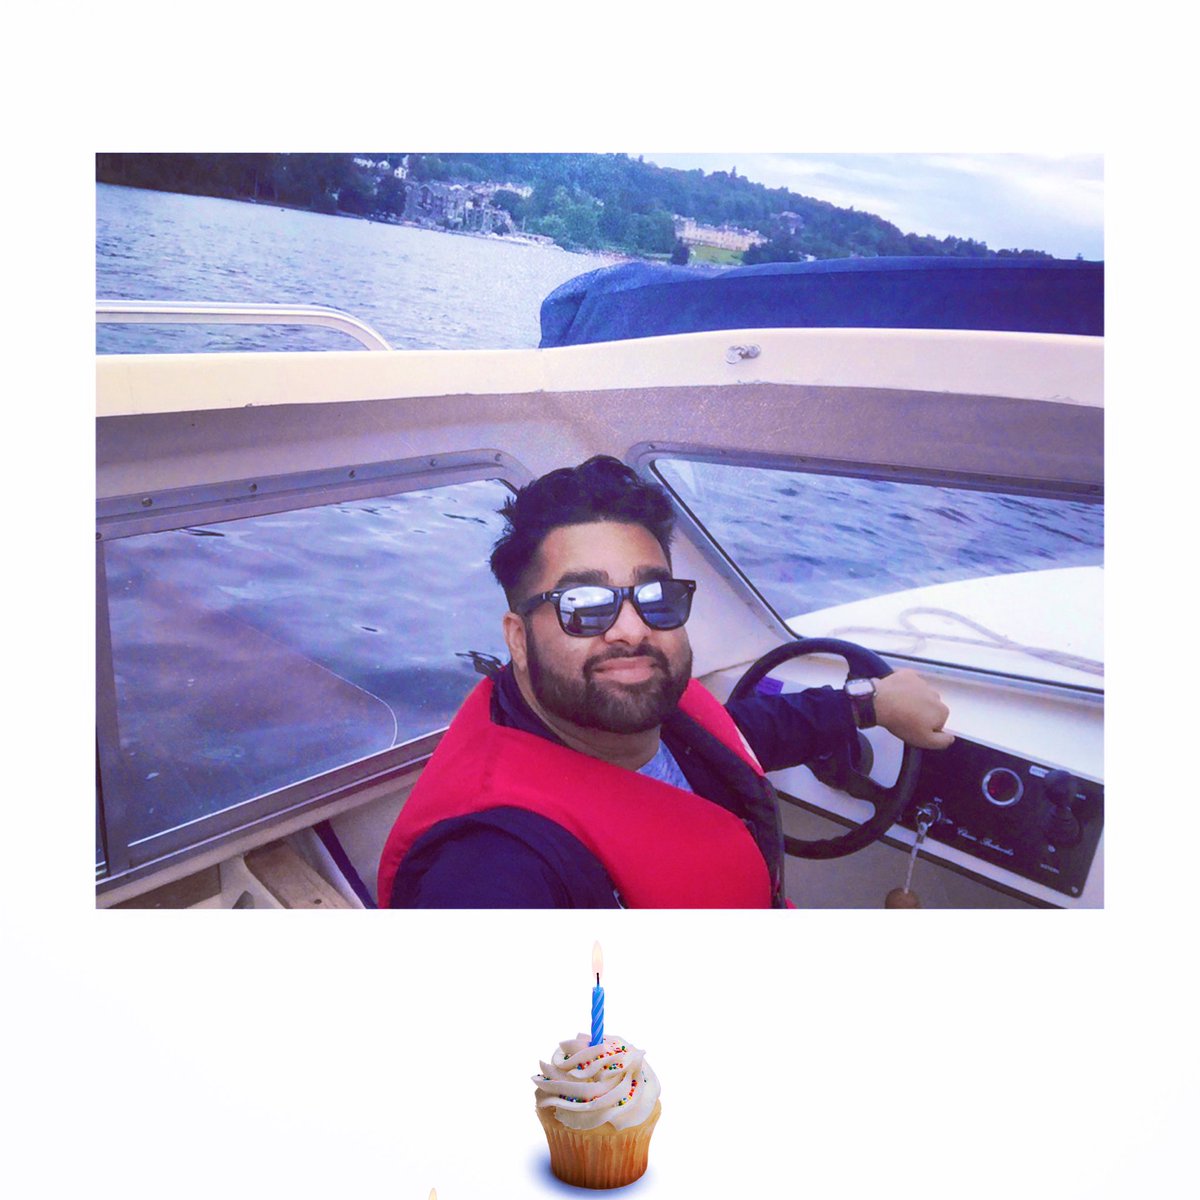 Its My Birthday.... 🎈
I’m on a boat ⛵️
#anotheryearolder #thankful  #greatful #newchapter 
#YesIamDefinitelytryingtosailawayfromcovina